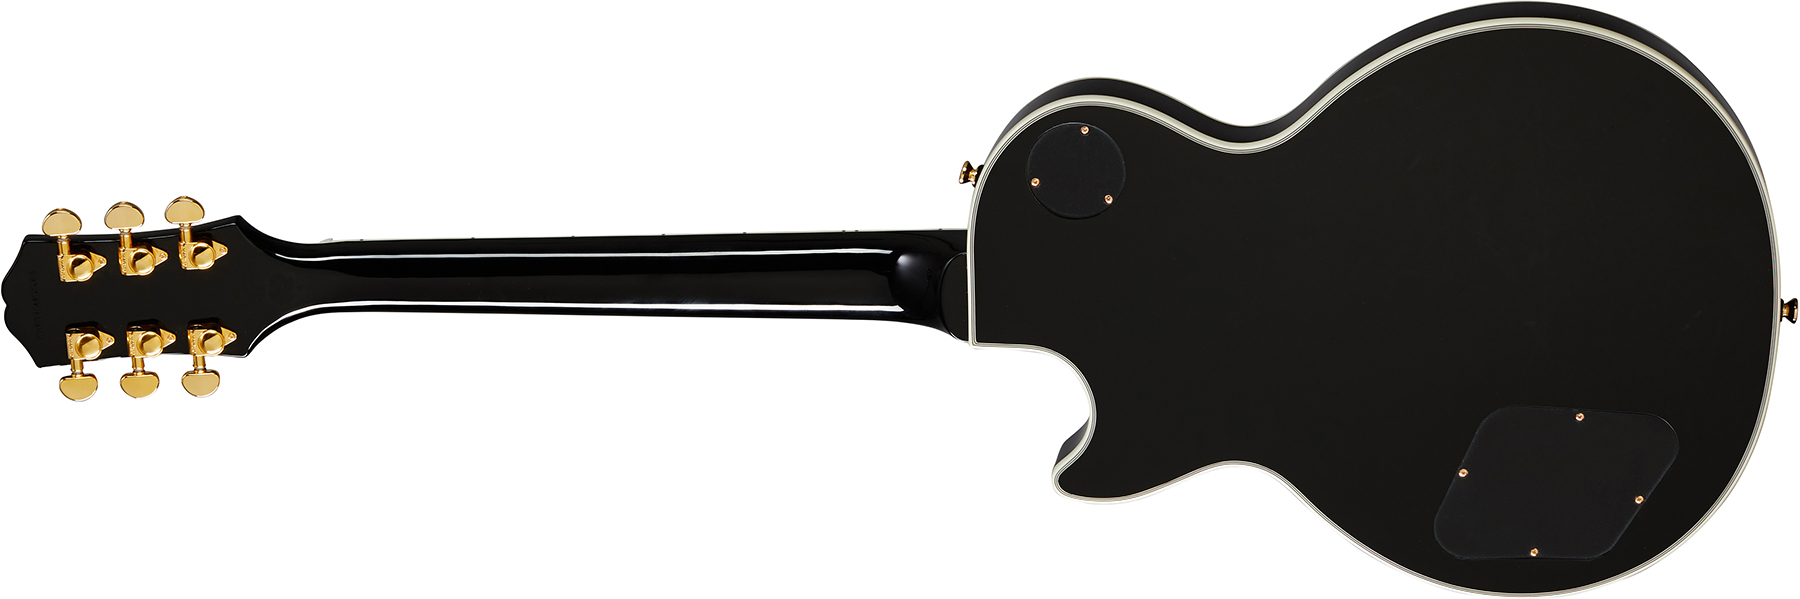 Epiphone Les Paul Custom 2h Ht Eb - Ebony - Single cut electric guitar - Variation 1